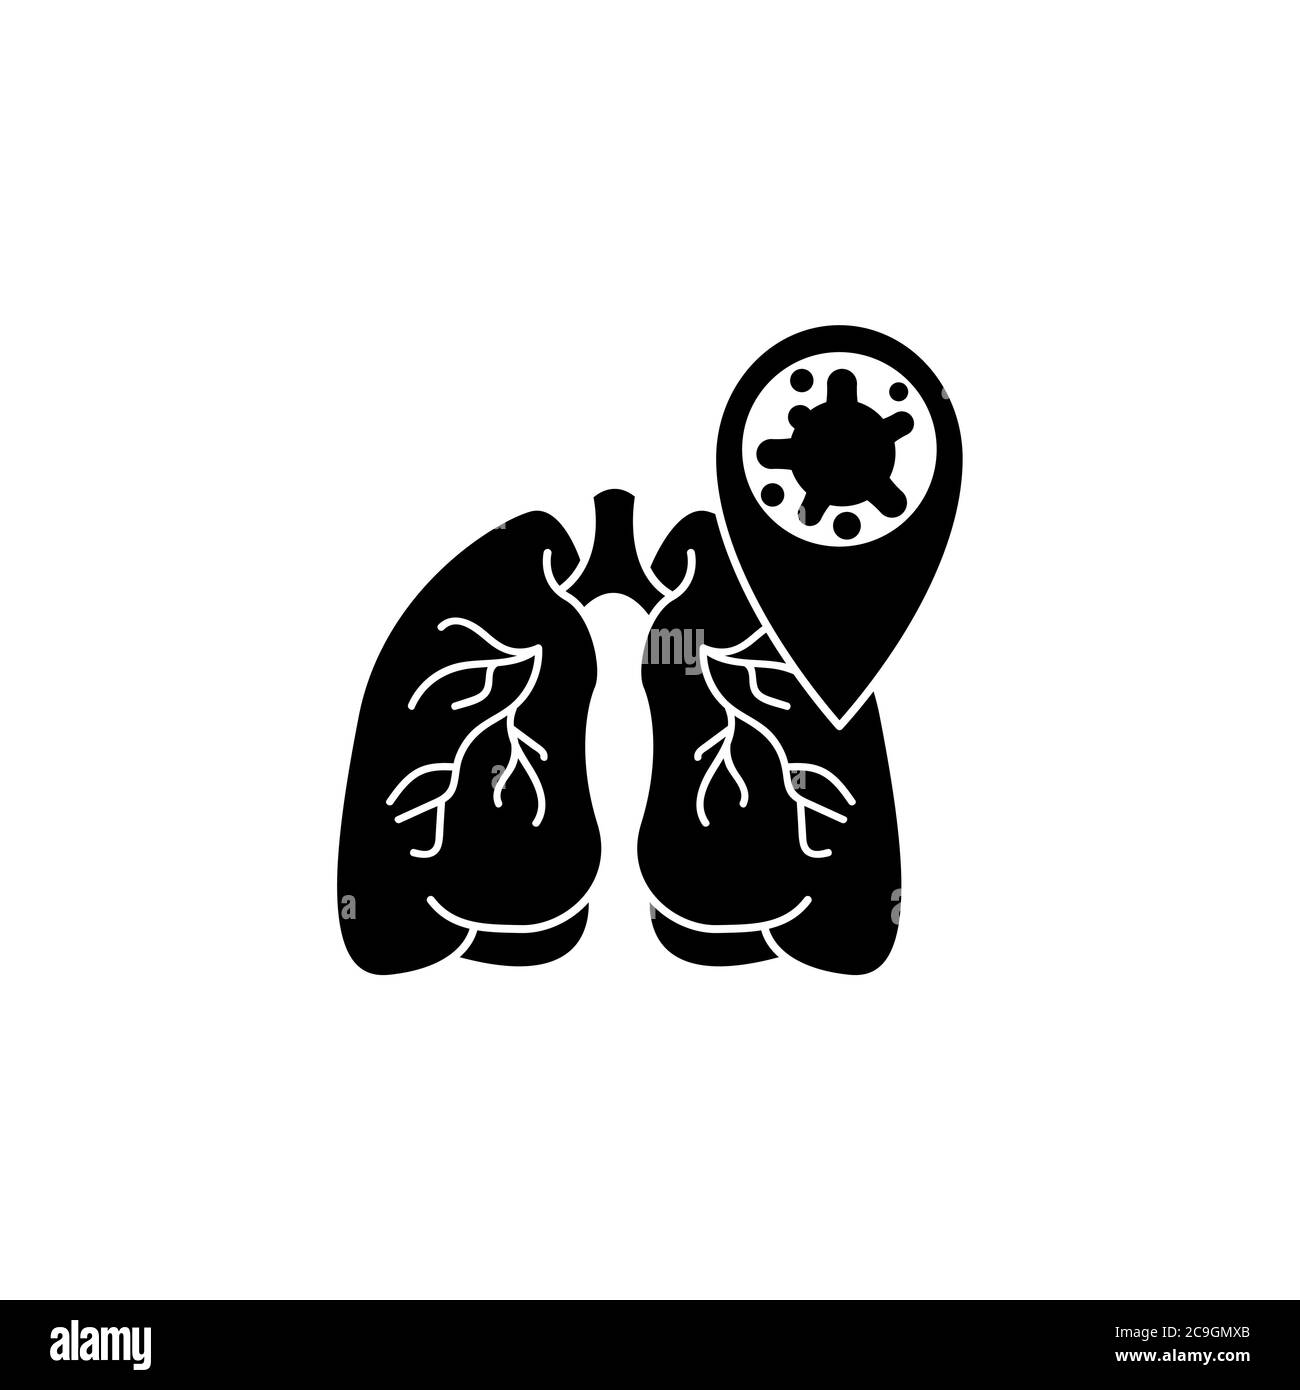 Virus, bacteria and lungs icon, symbol, sign. coronavirus, COVID-19 icon, logo black on white background. Stock Vector